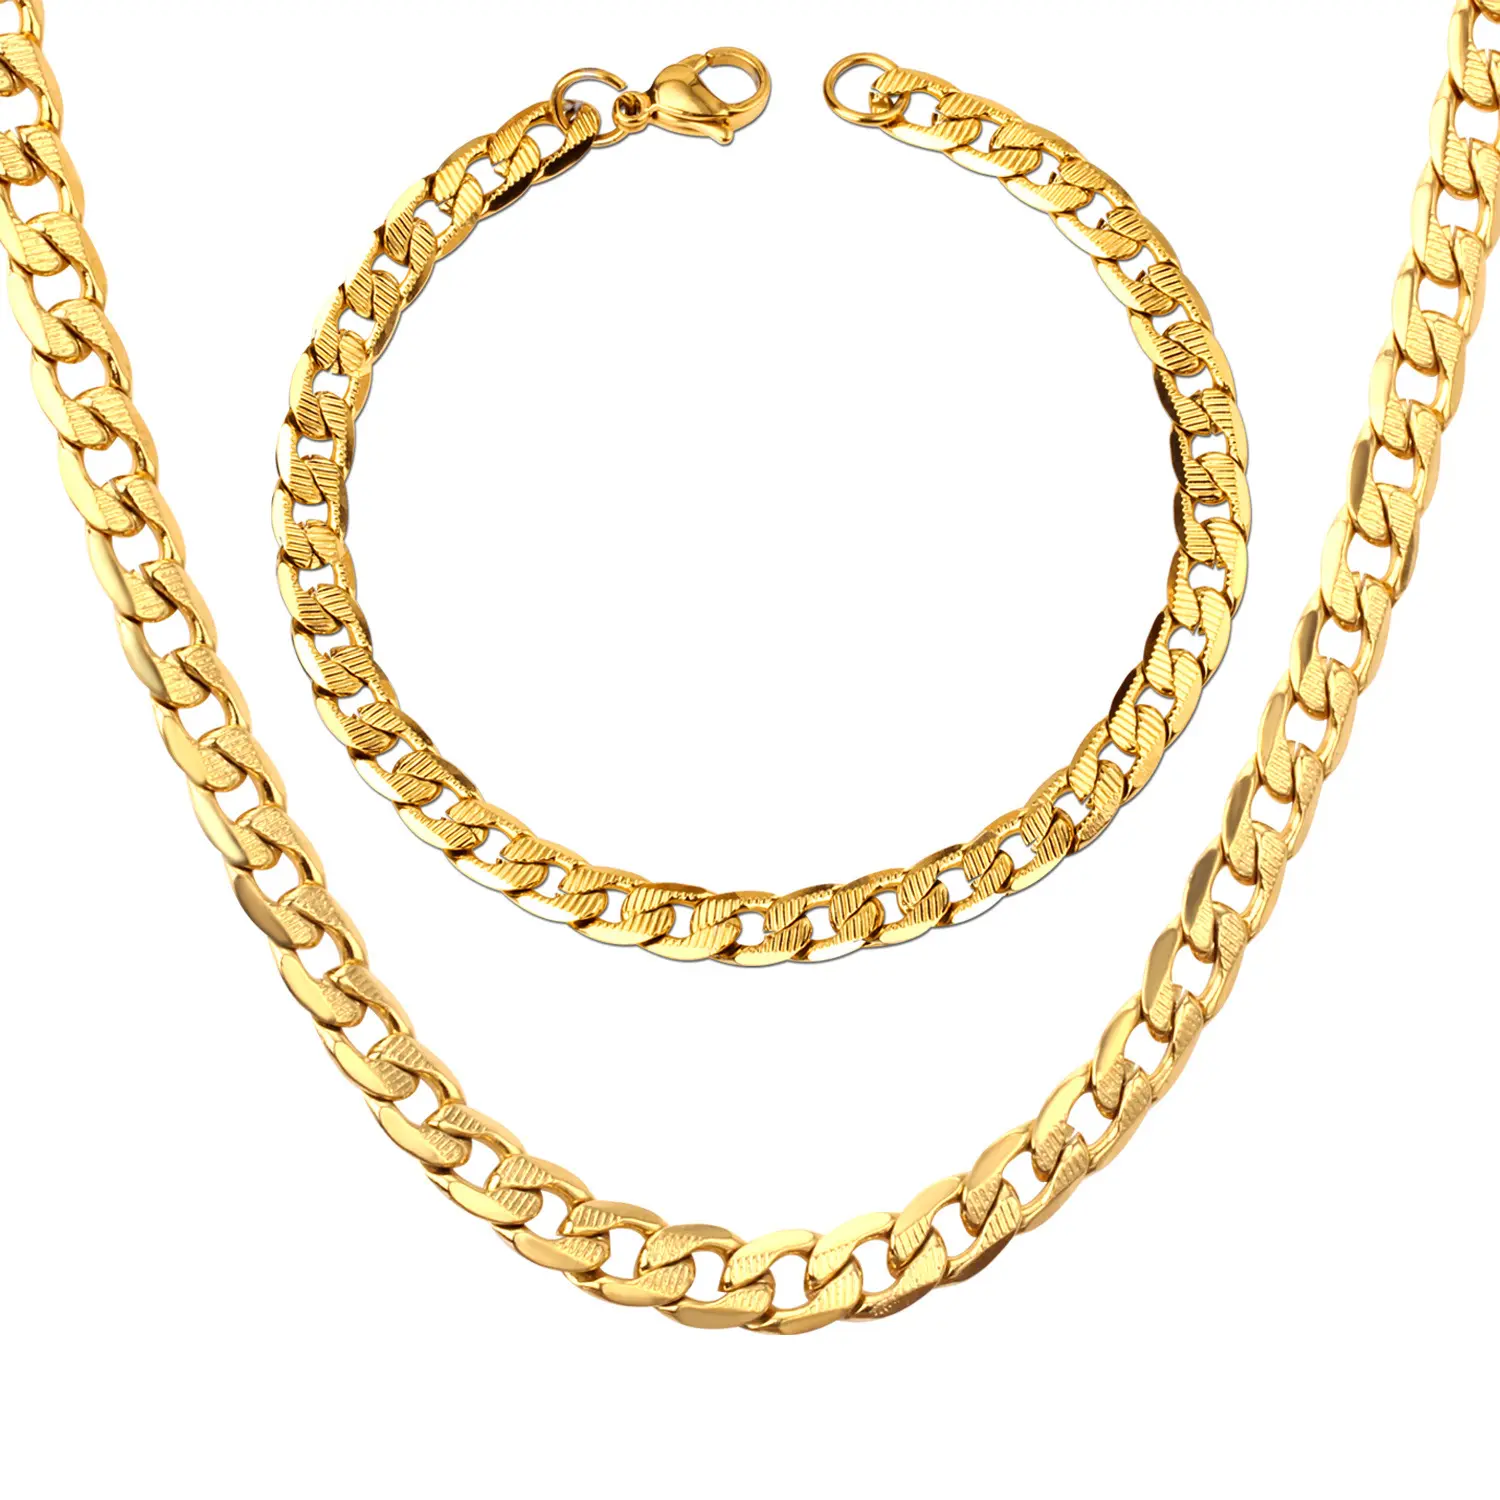 Cuban Link fashion chain charm wedding gifts women men snake chian necklace bracelets jewelry sets